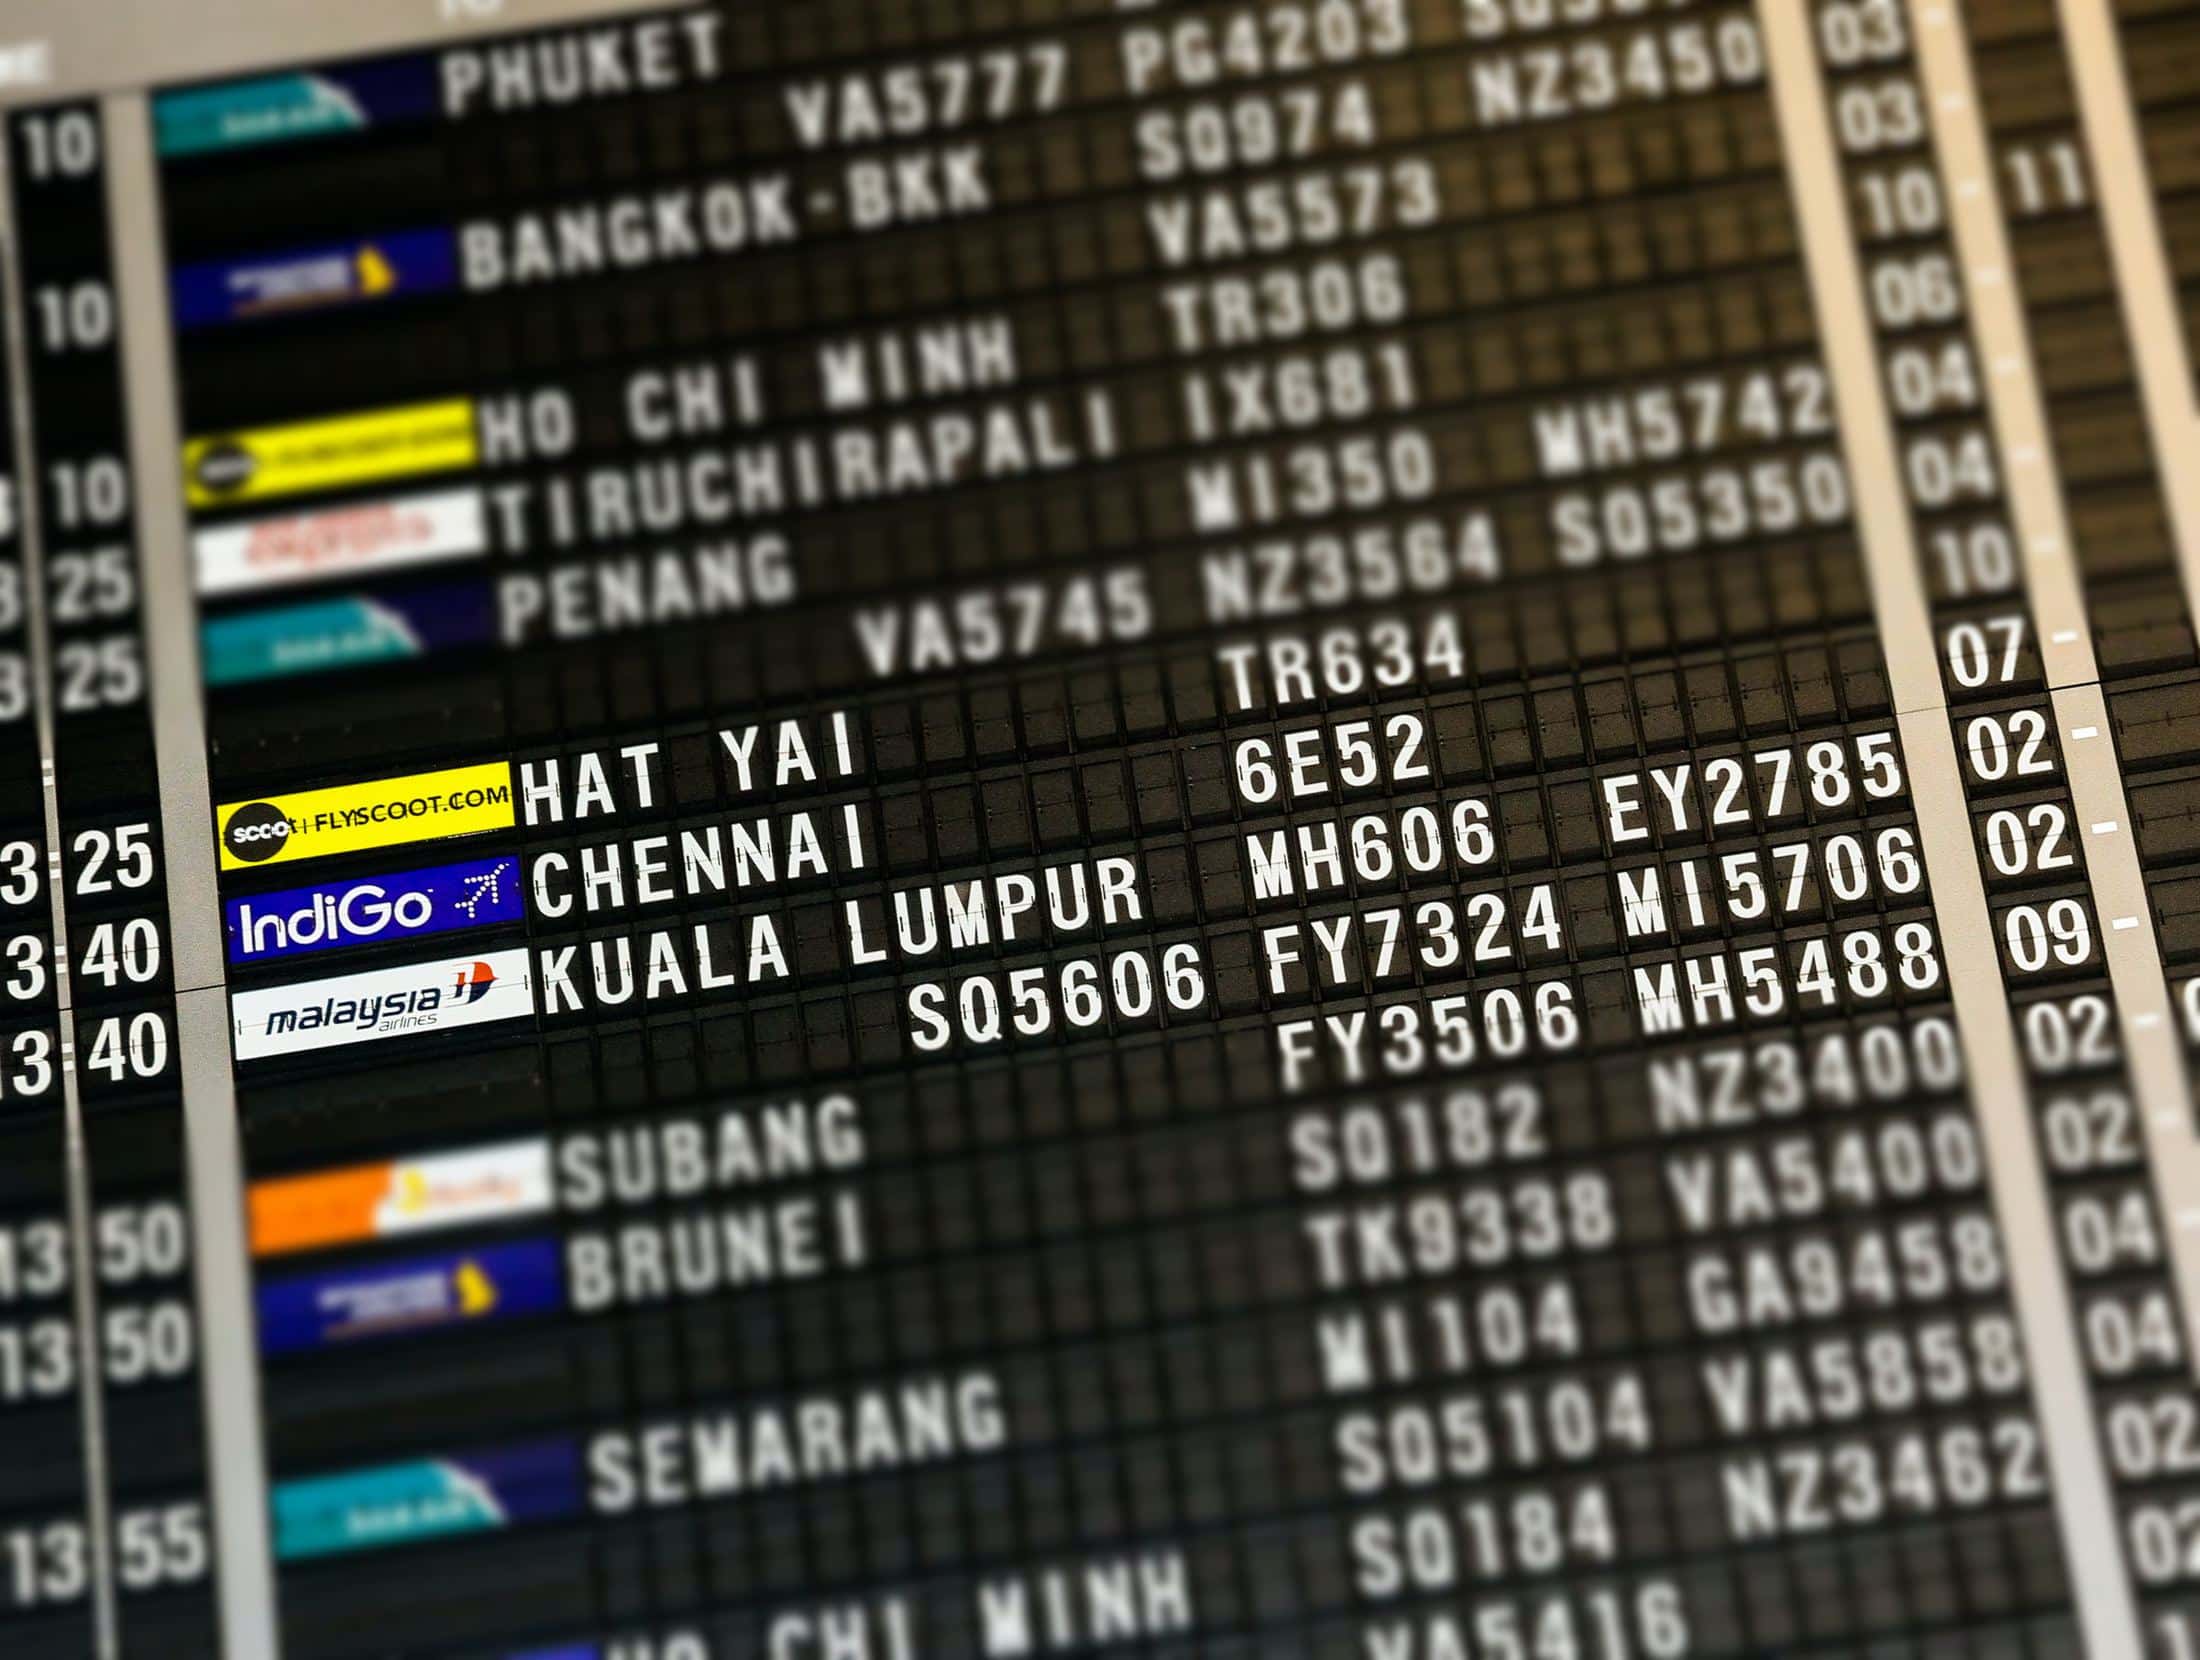 flight board highlighting Hat Yai, Chennai, and Kuala Lumpur